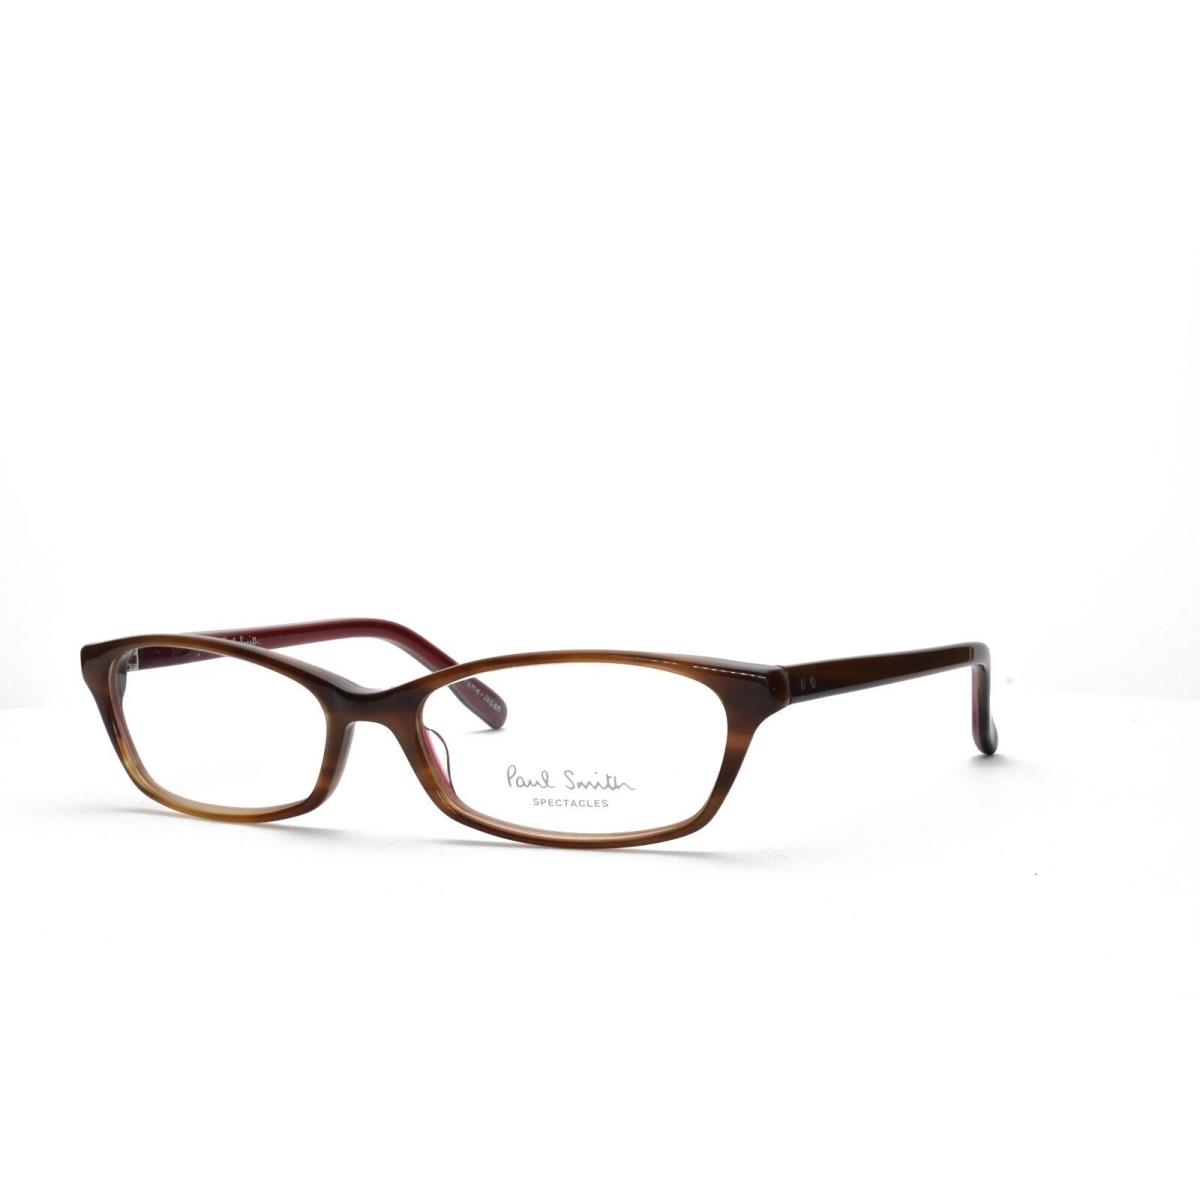 Paul Smith 257 Syga Brown Vtg Vintage Eyeglasses Frames